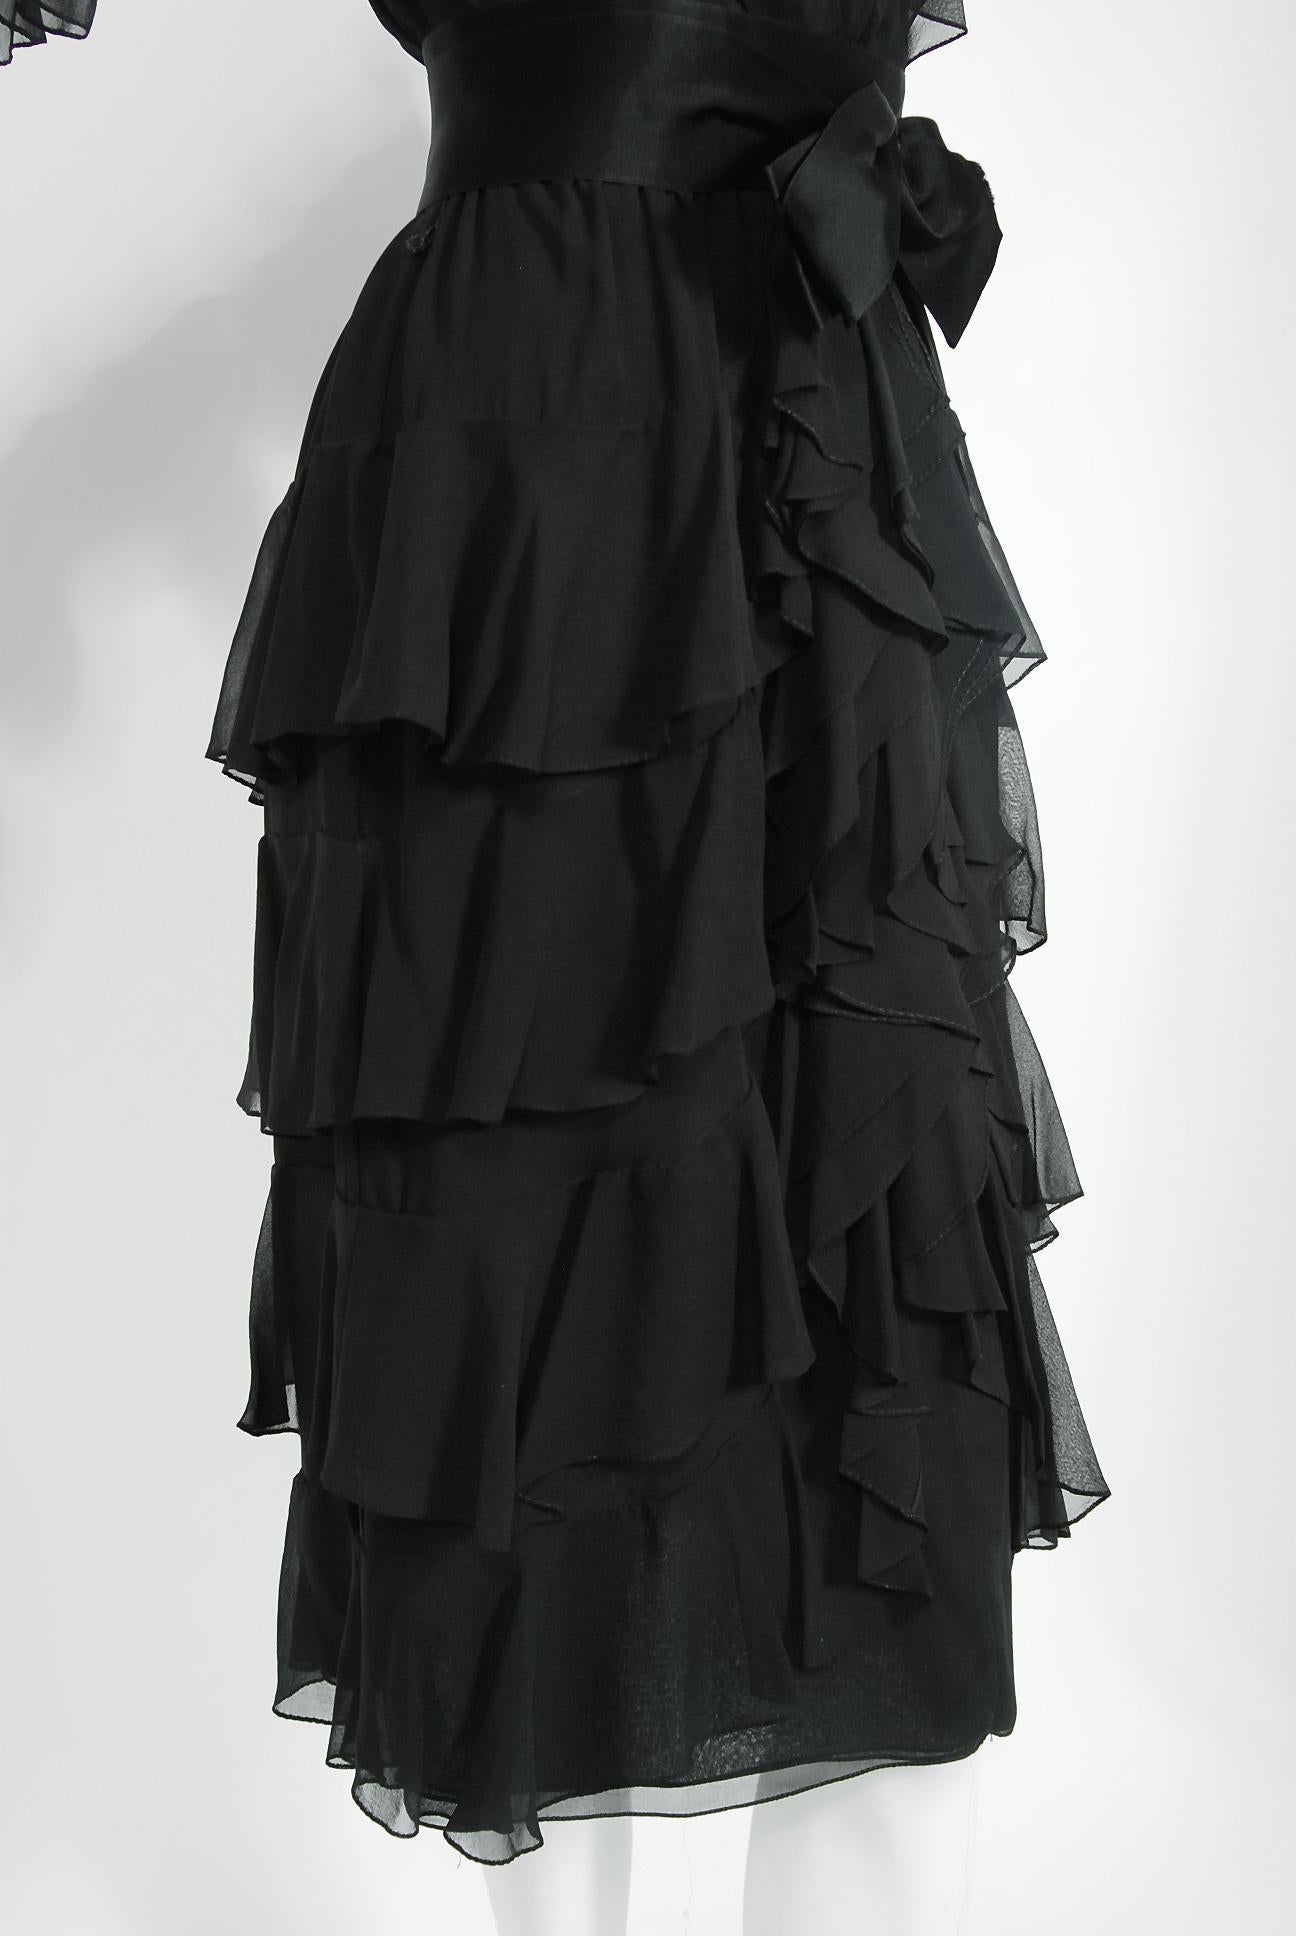 1973 Bill Blass Couture Black Tiered Ruffle Silk-Chiffon Plunge Cocktail Dress 1